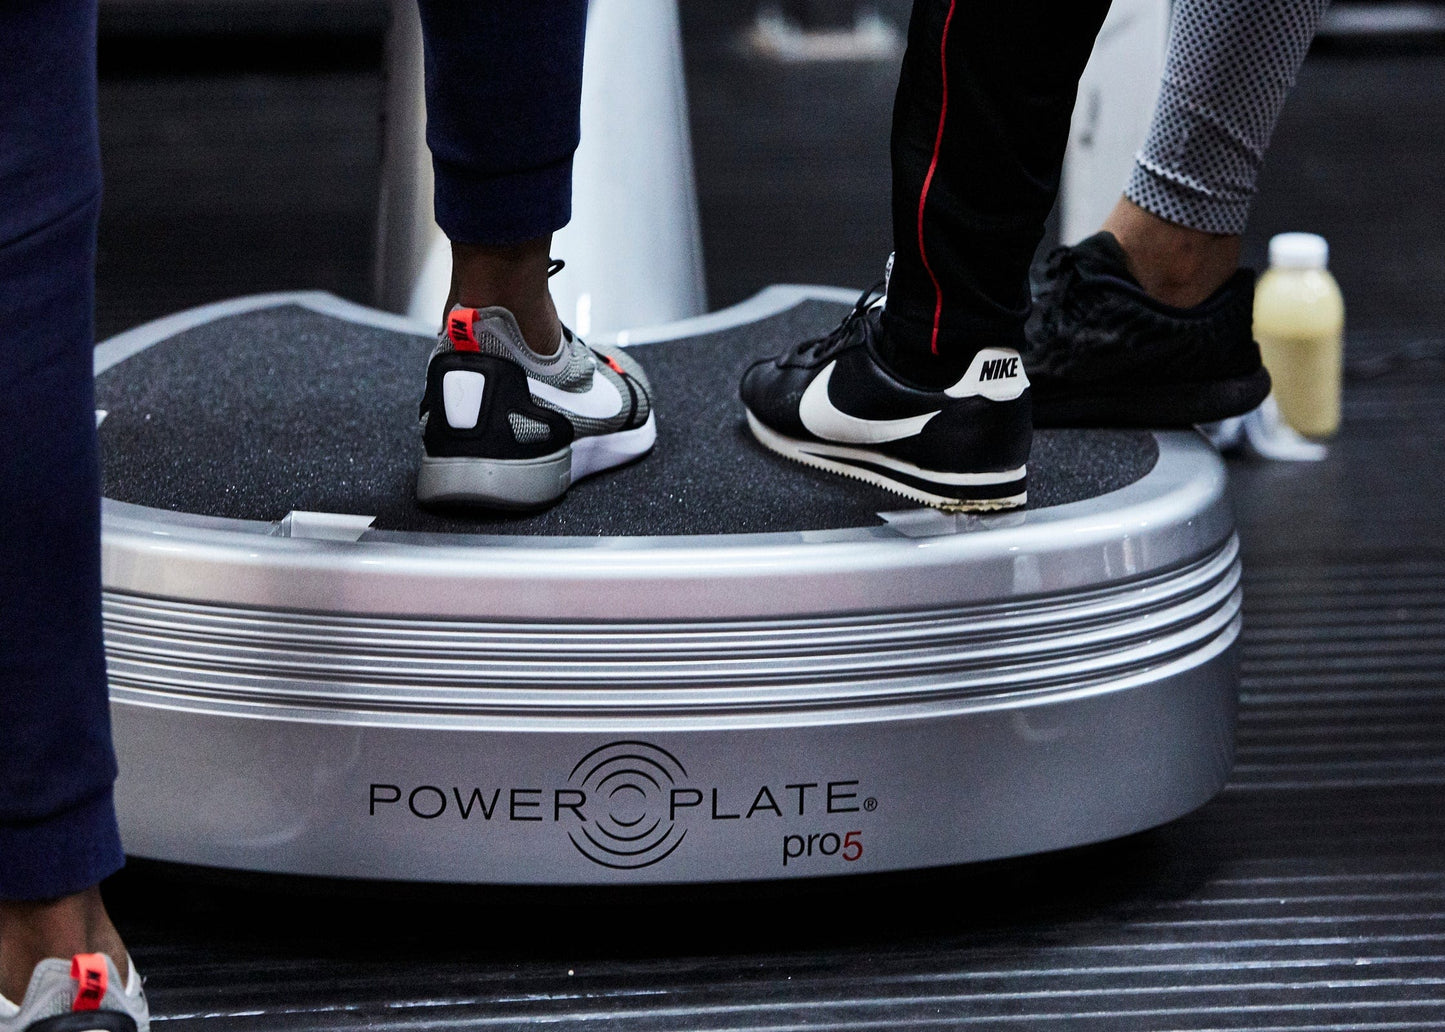 Power Plate pro5 Whole Body Vibration Exercise Machine - Silver